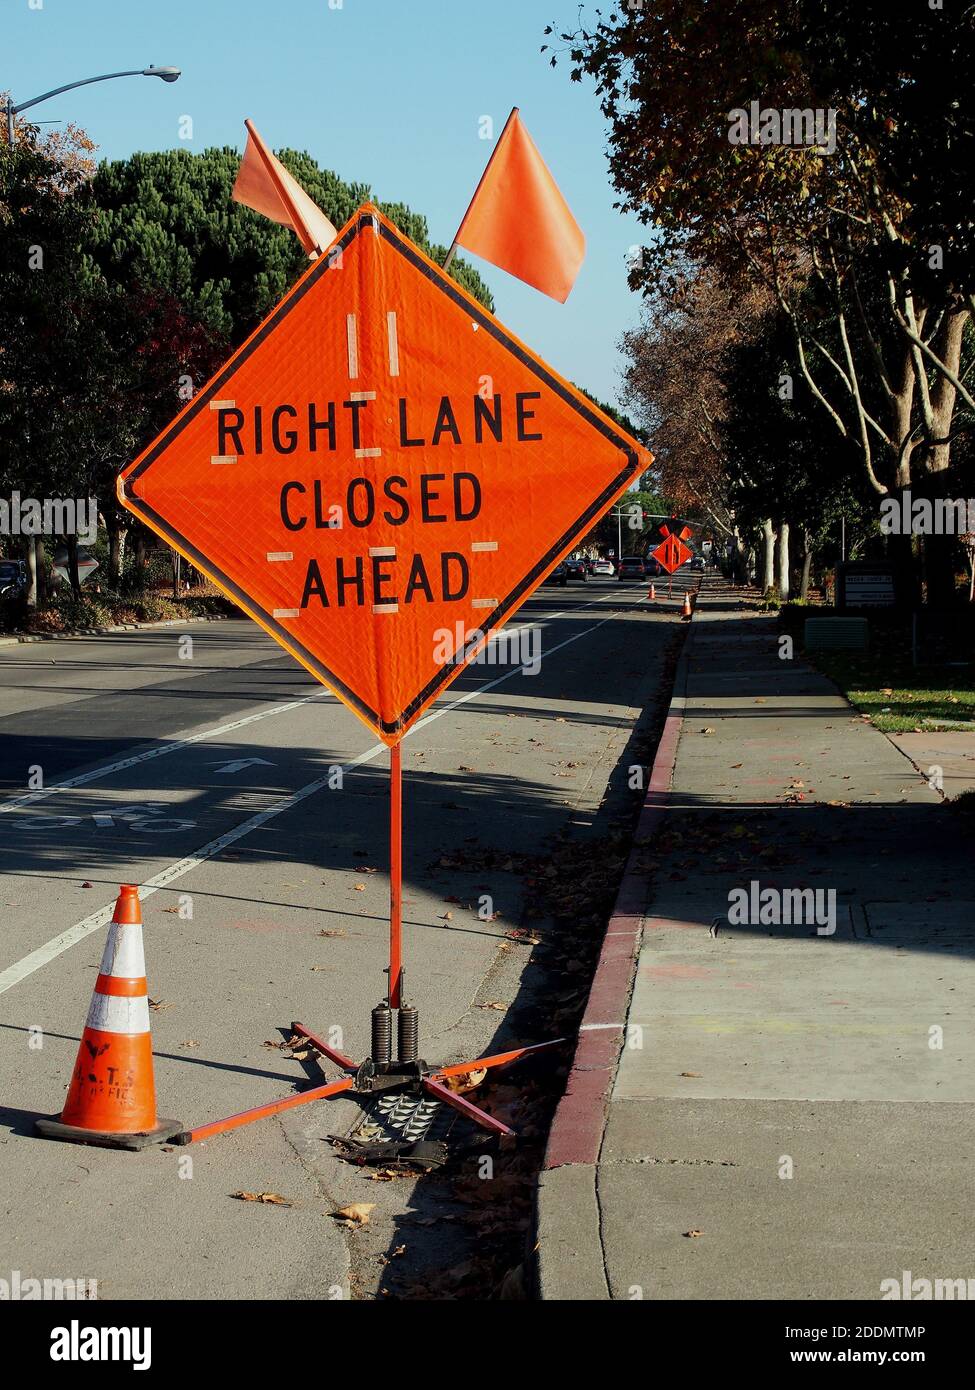 right lane closed ahead temporary traffic sign on Alvarado Niles Blvd in Union City, California Stock Photo